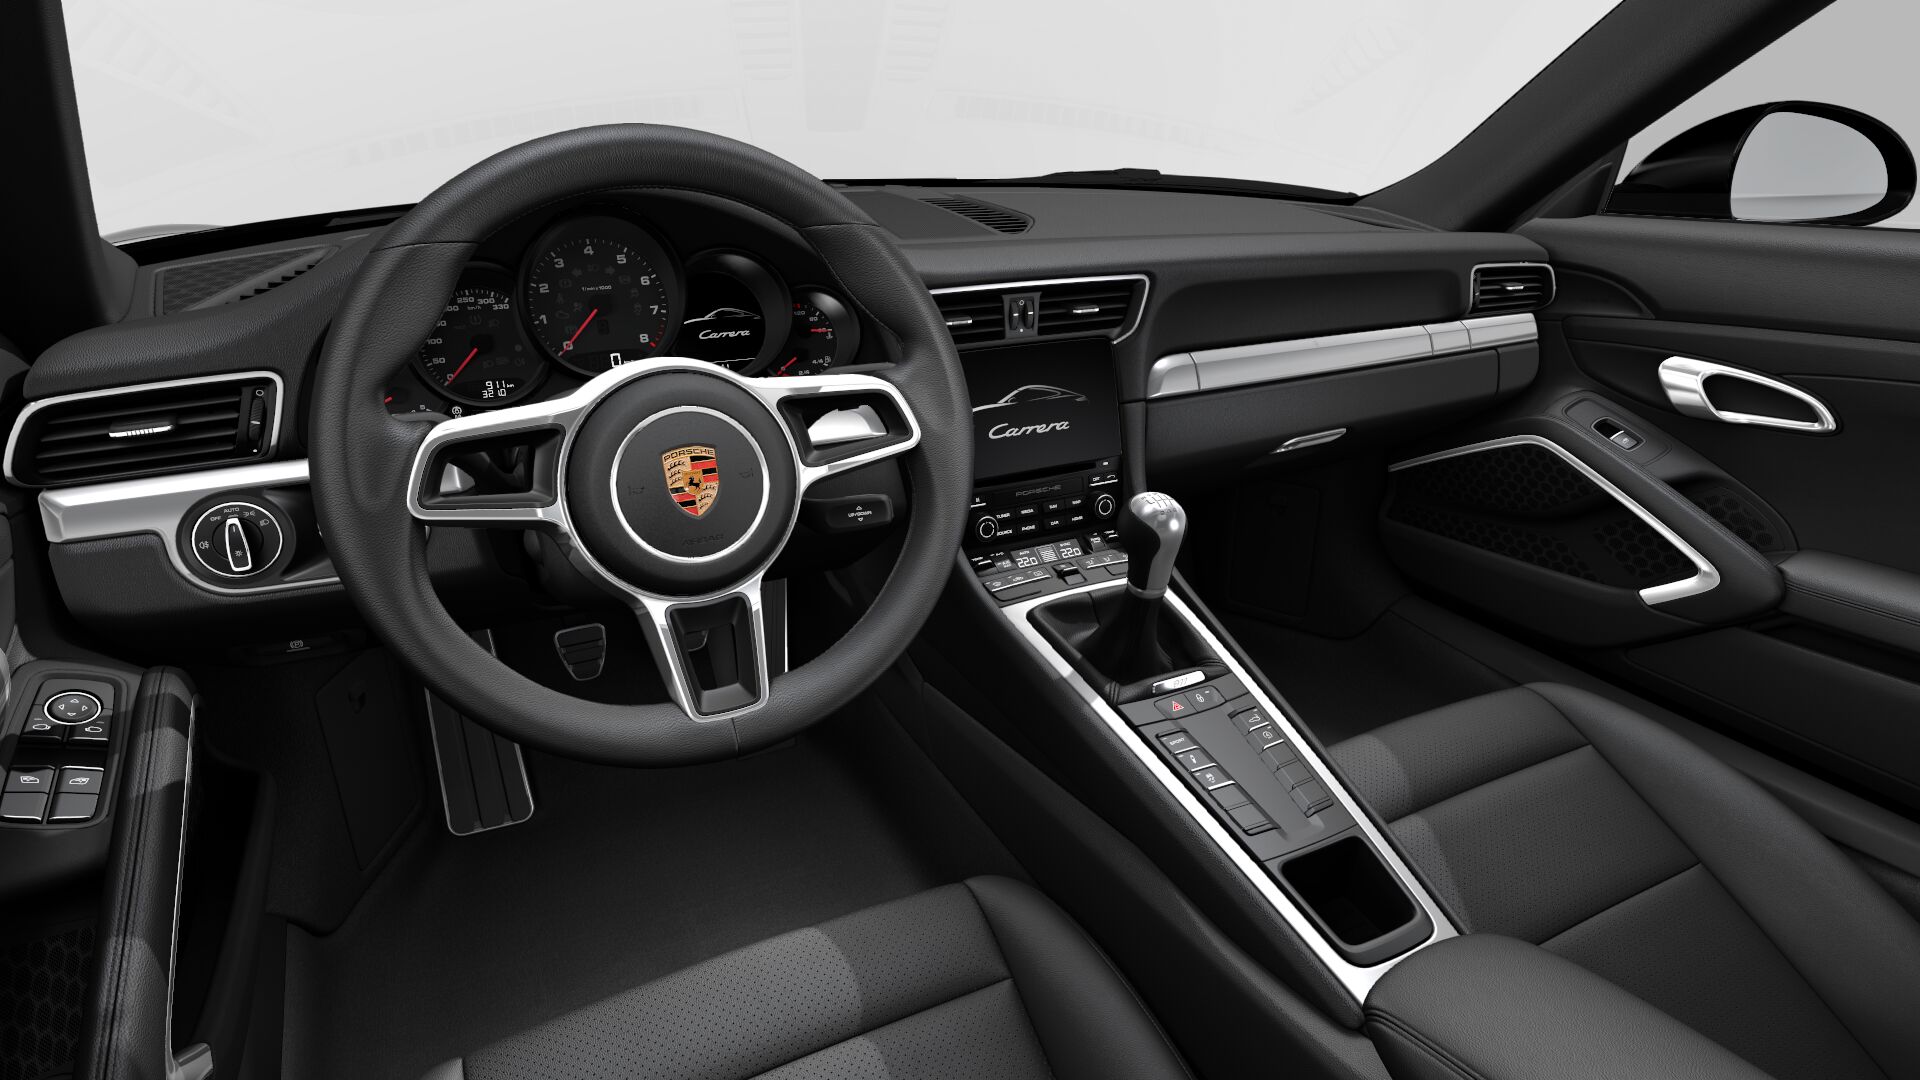 Porsche 911 Carrera S interior front view